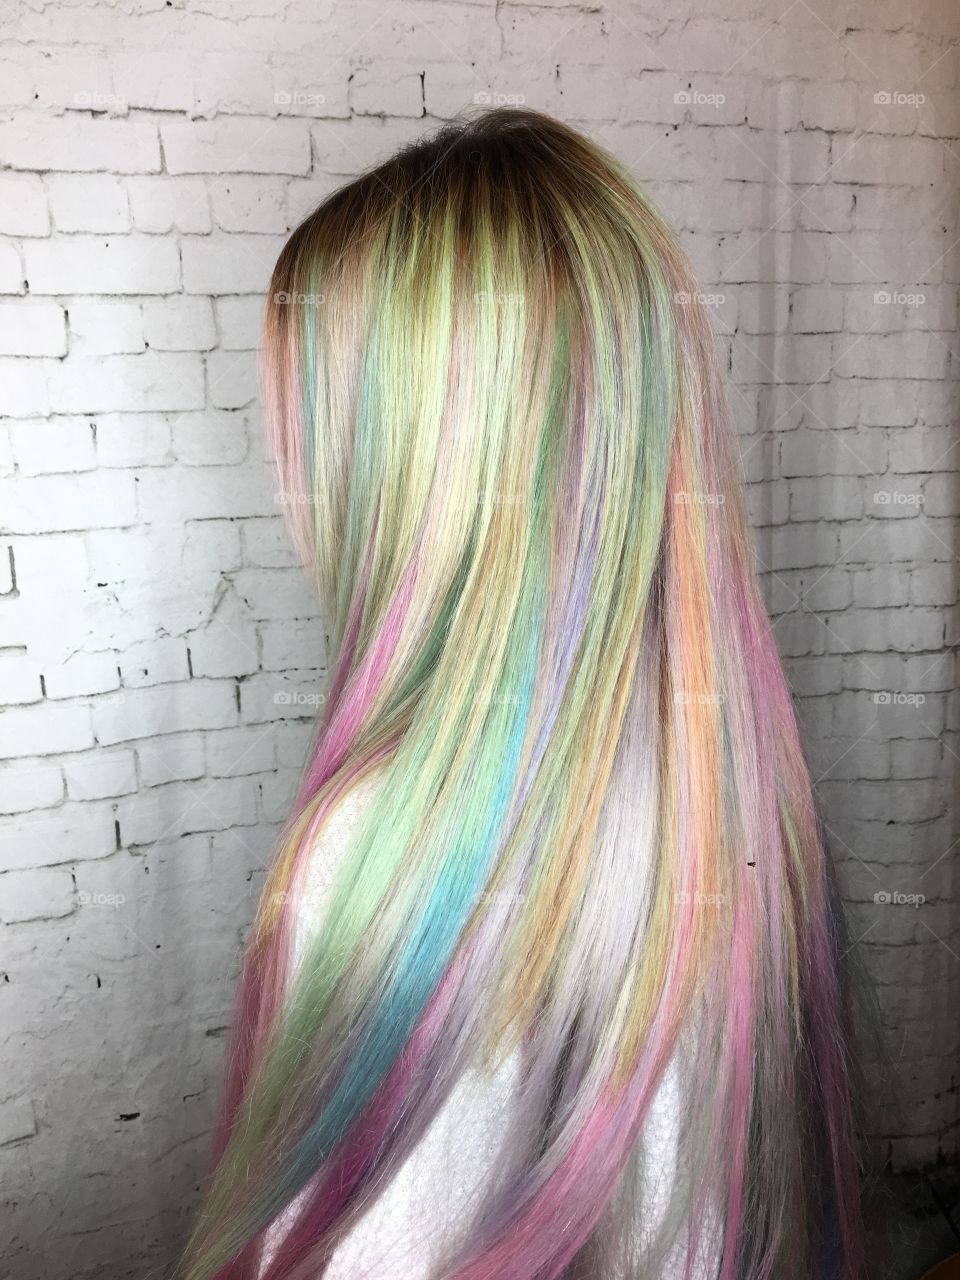 unicorn hair